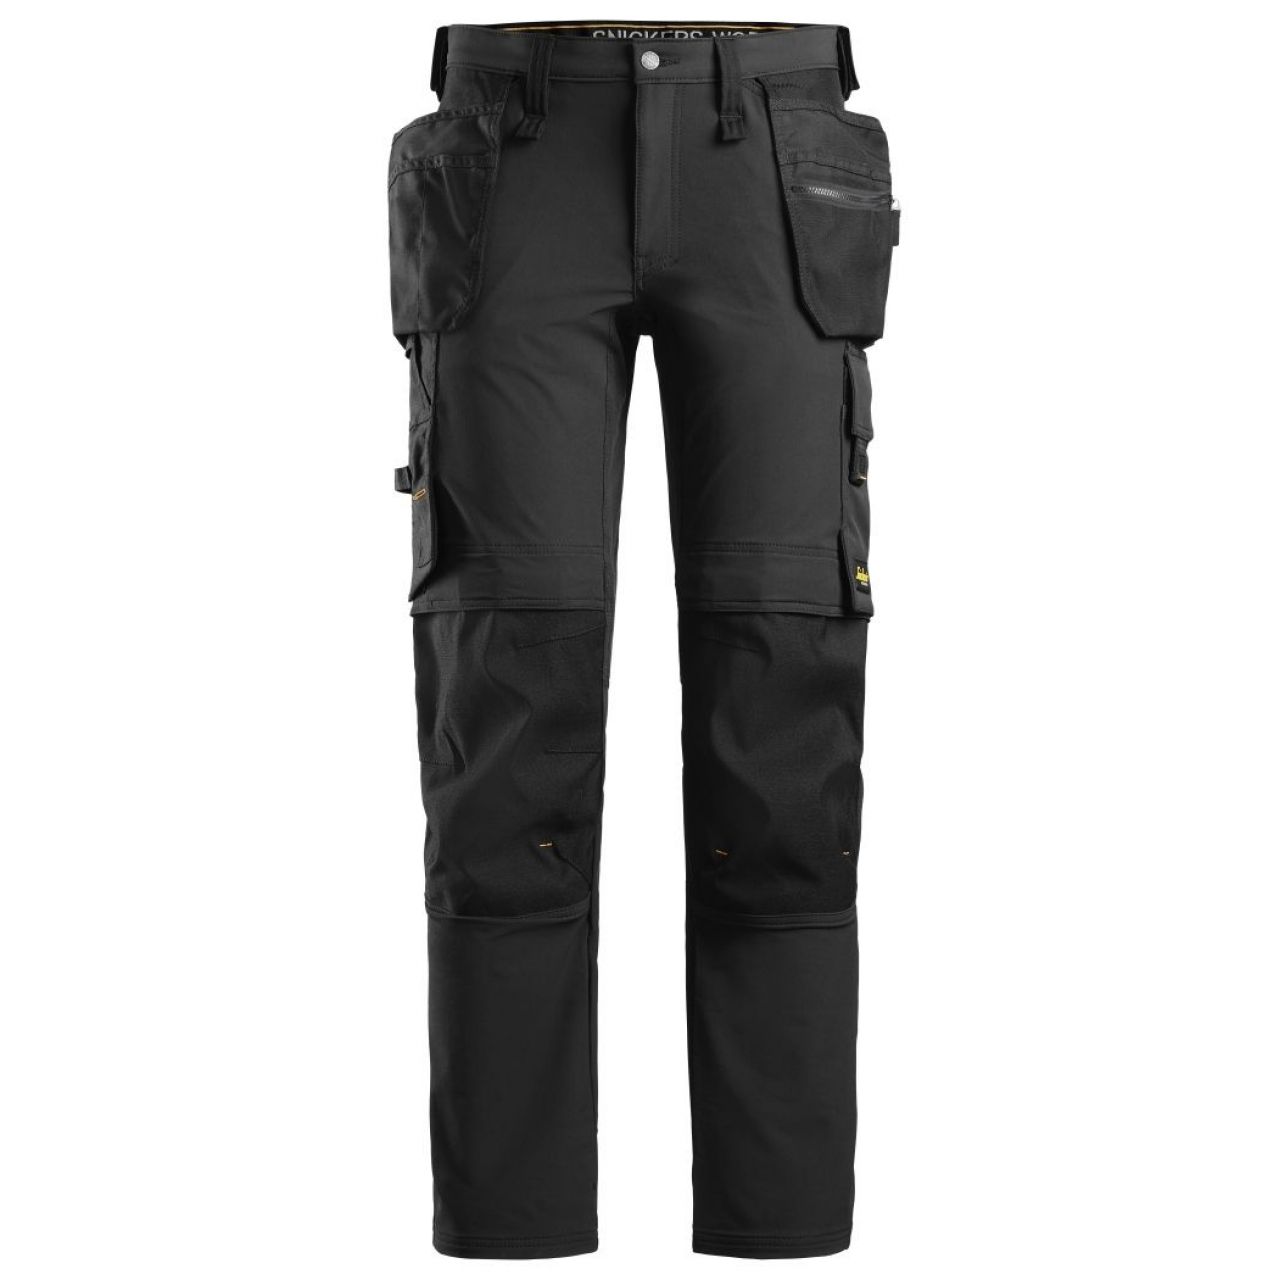 Pantalon elastico AllroundWork bolsillos flotantes negro talla 200